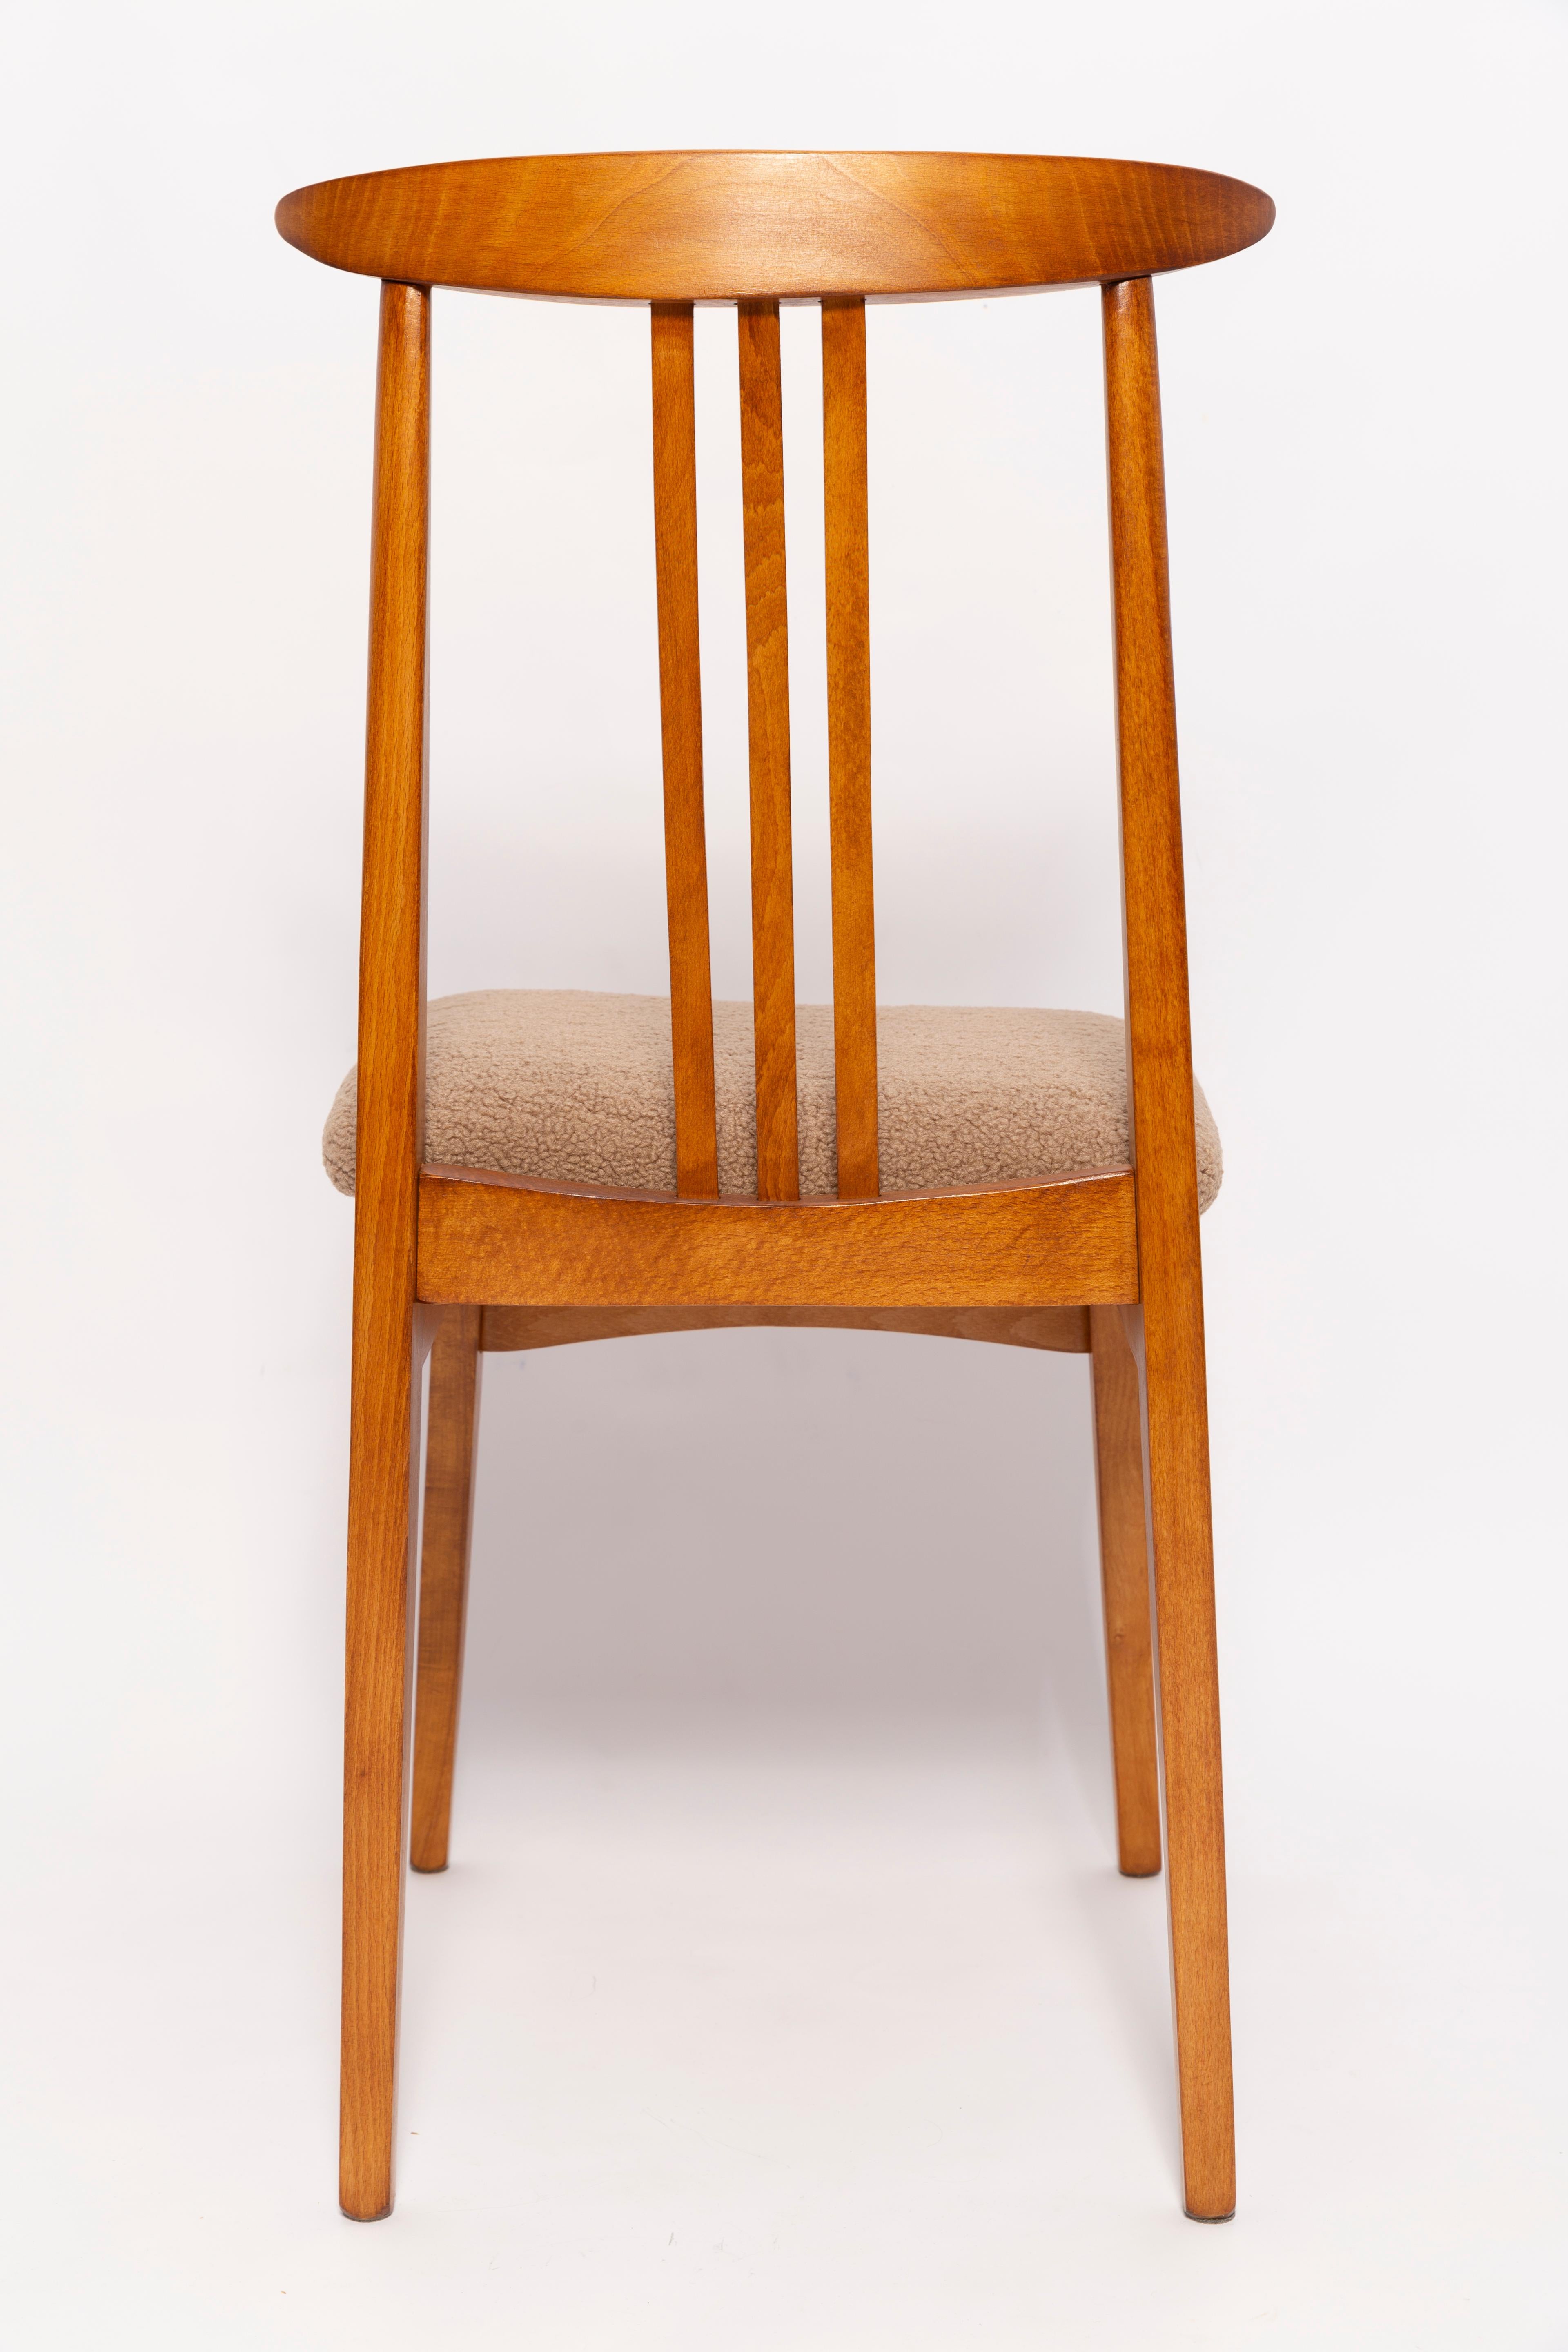 Polish Six Mid-Century Latte Boucle Chairs, Medium Wood, M. Zielinski, Europe 1960s For Sale